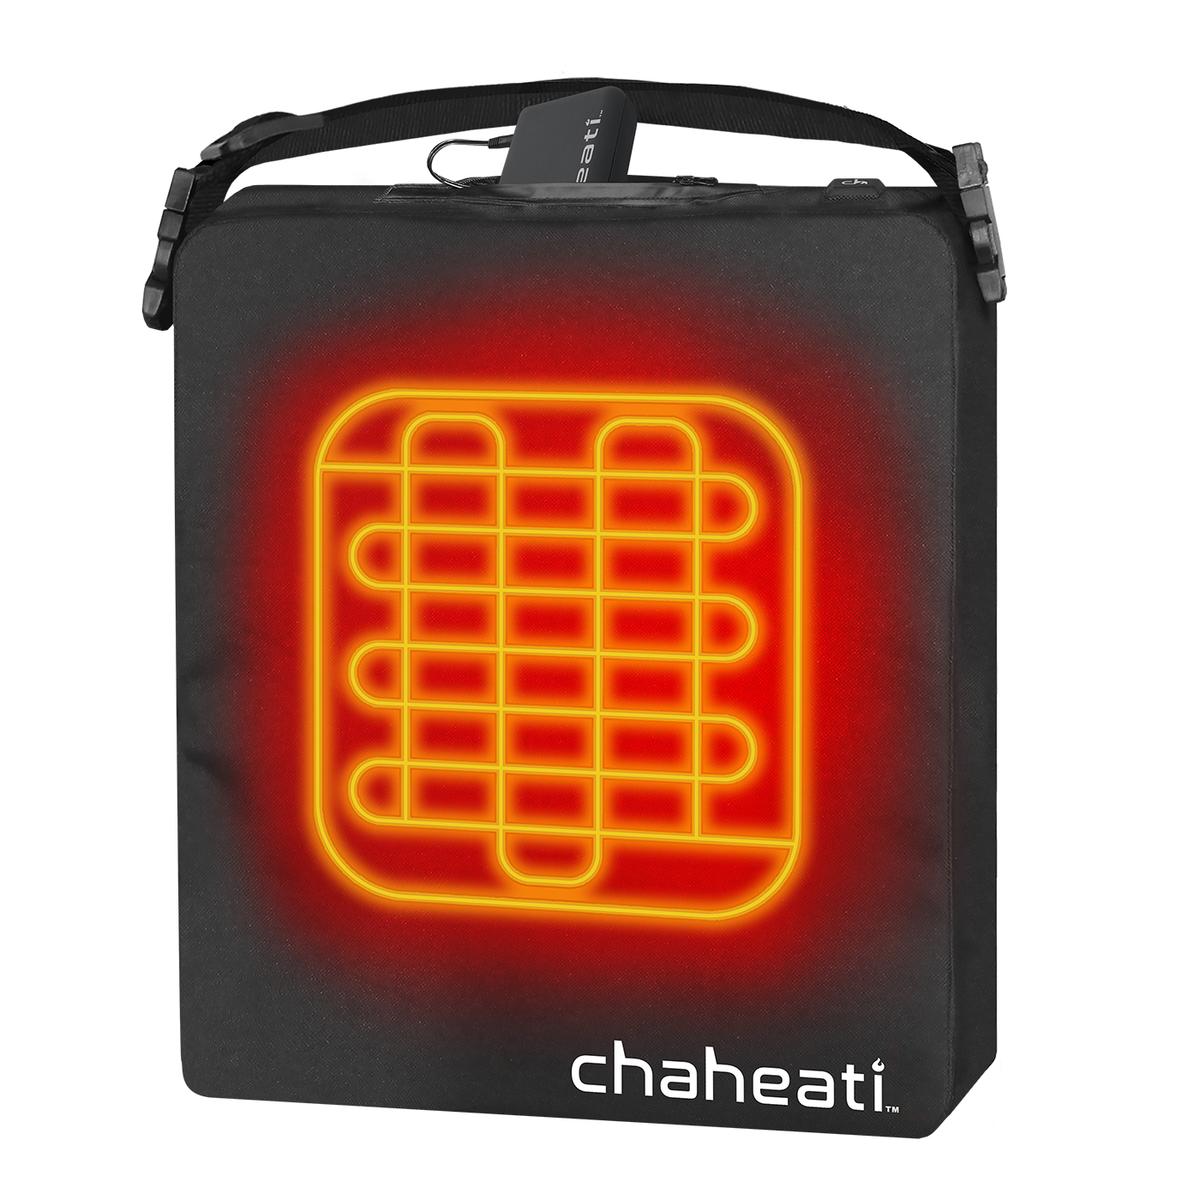 Chaheati 7V Battery Heated Seat Cushion - Front